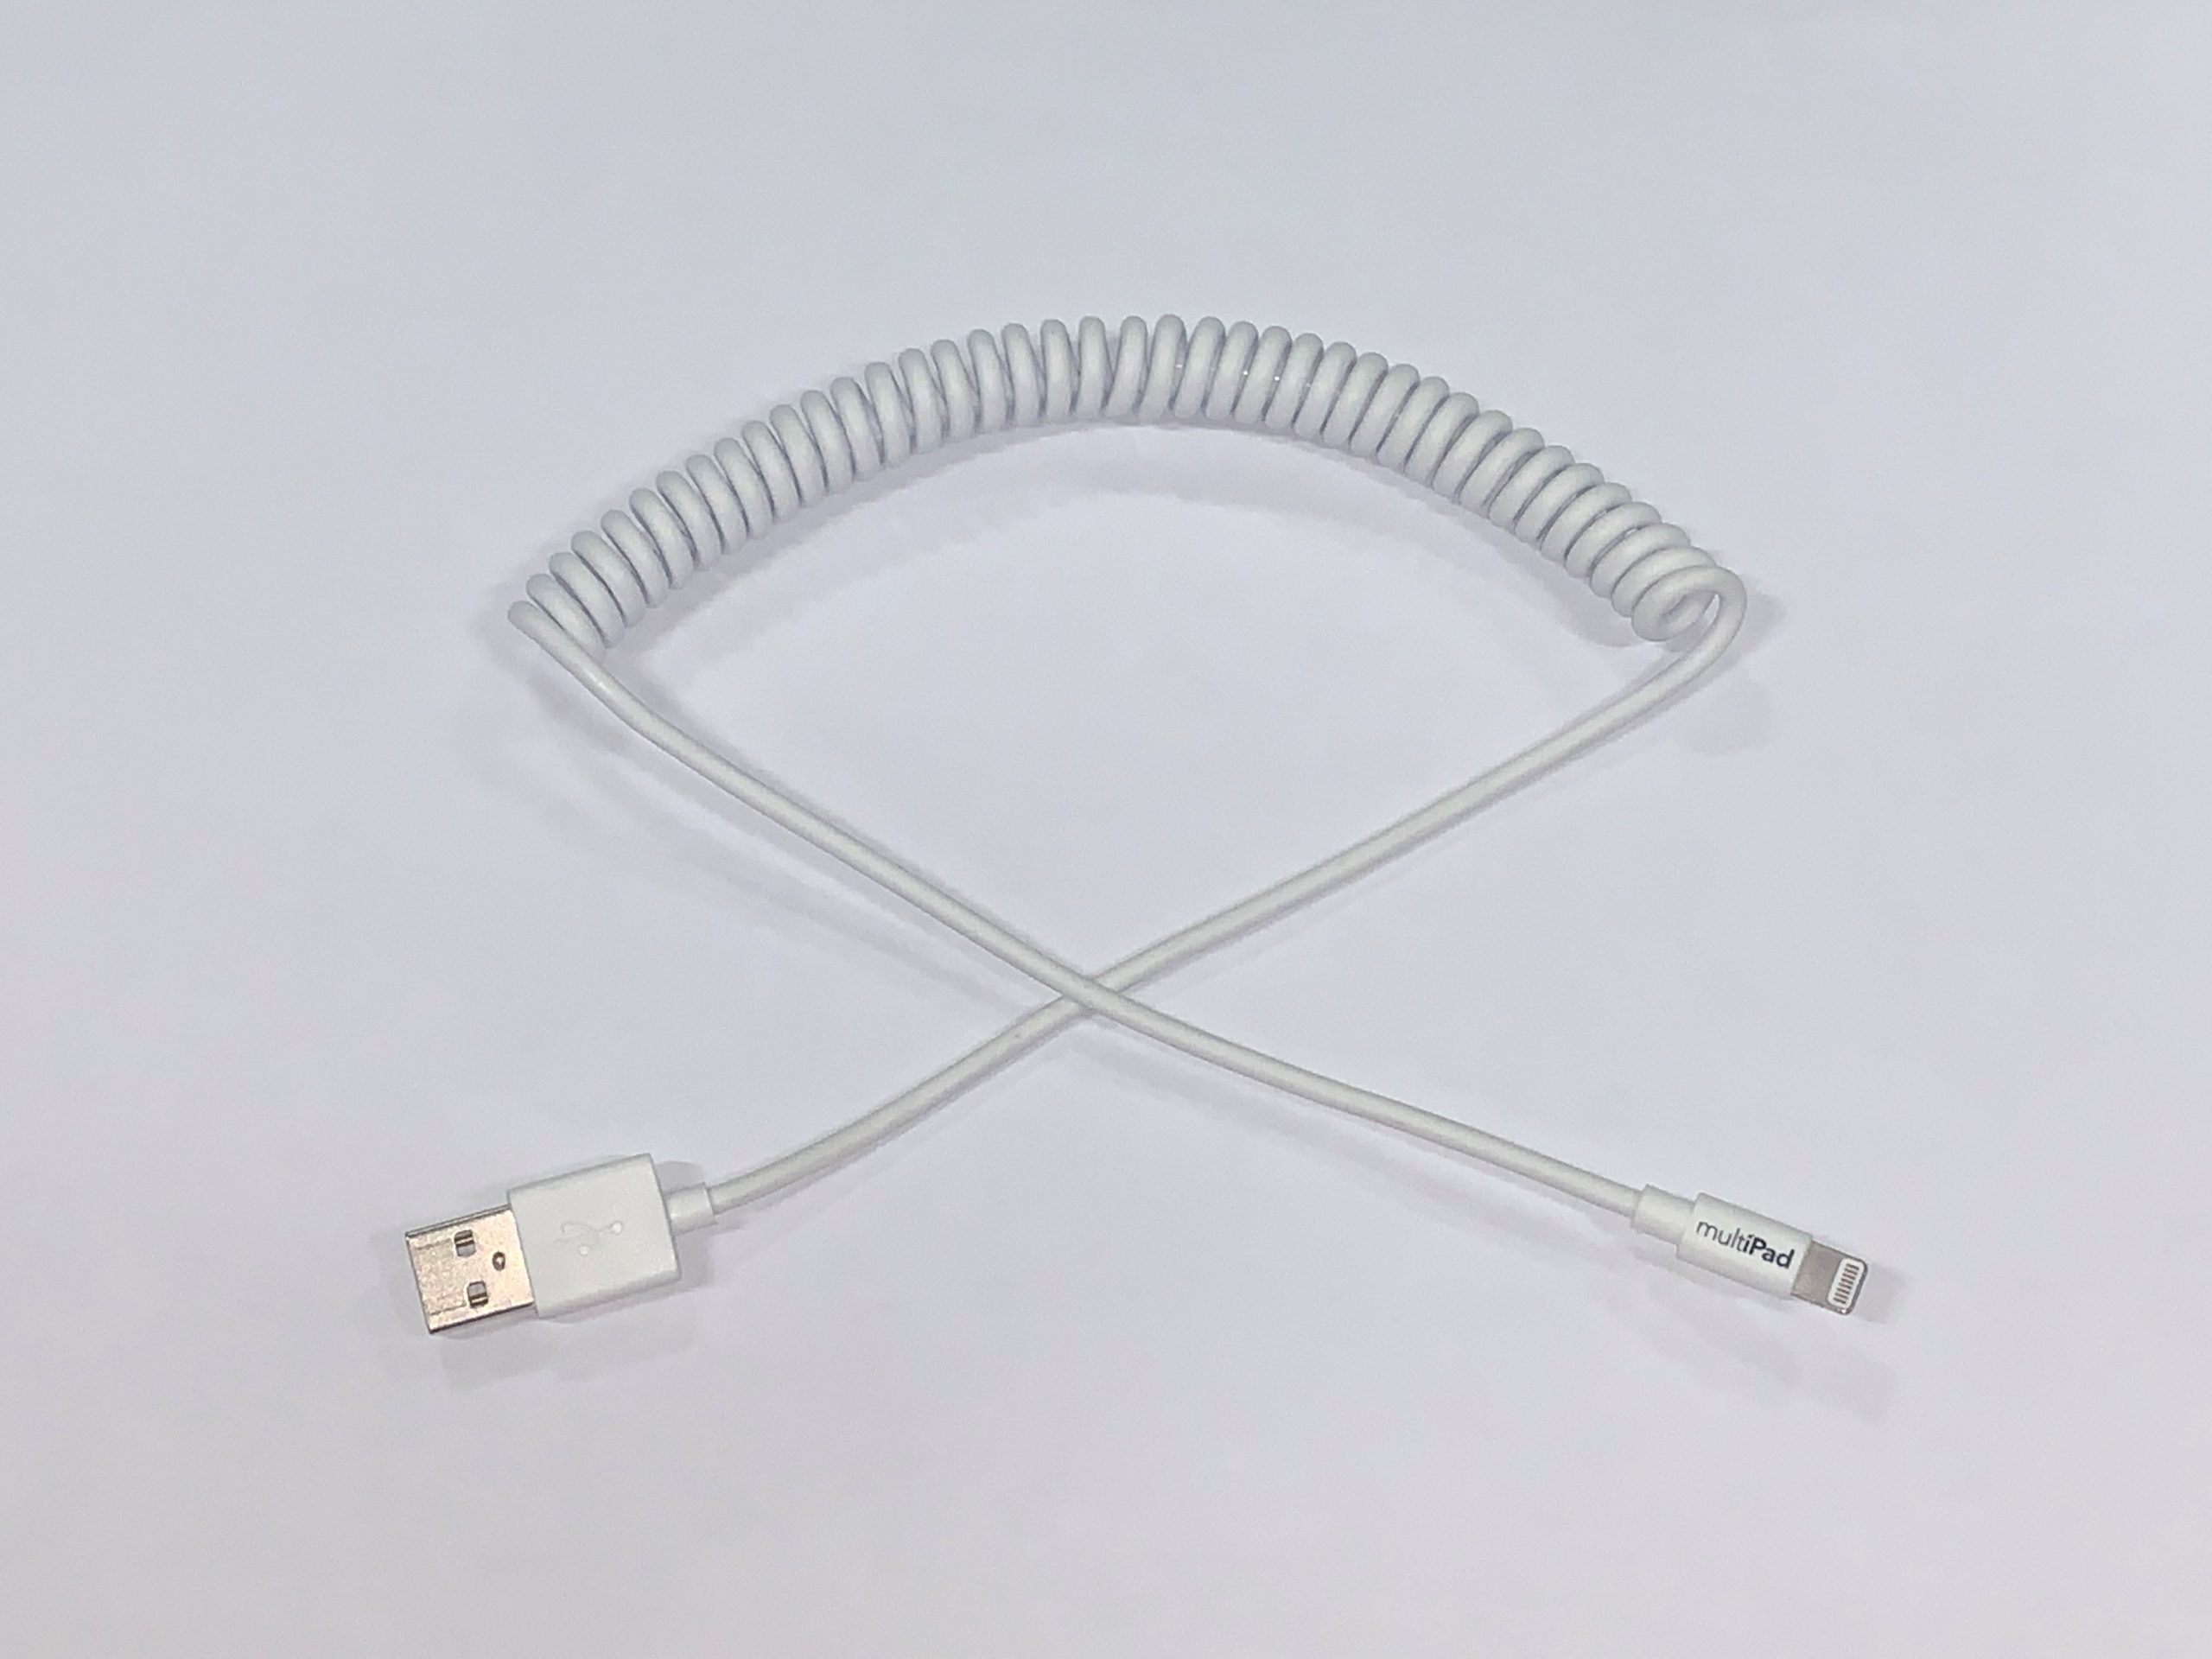 cable cargador apple ipad